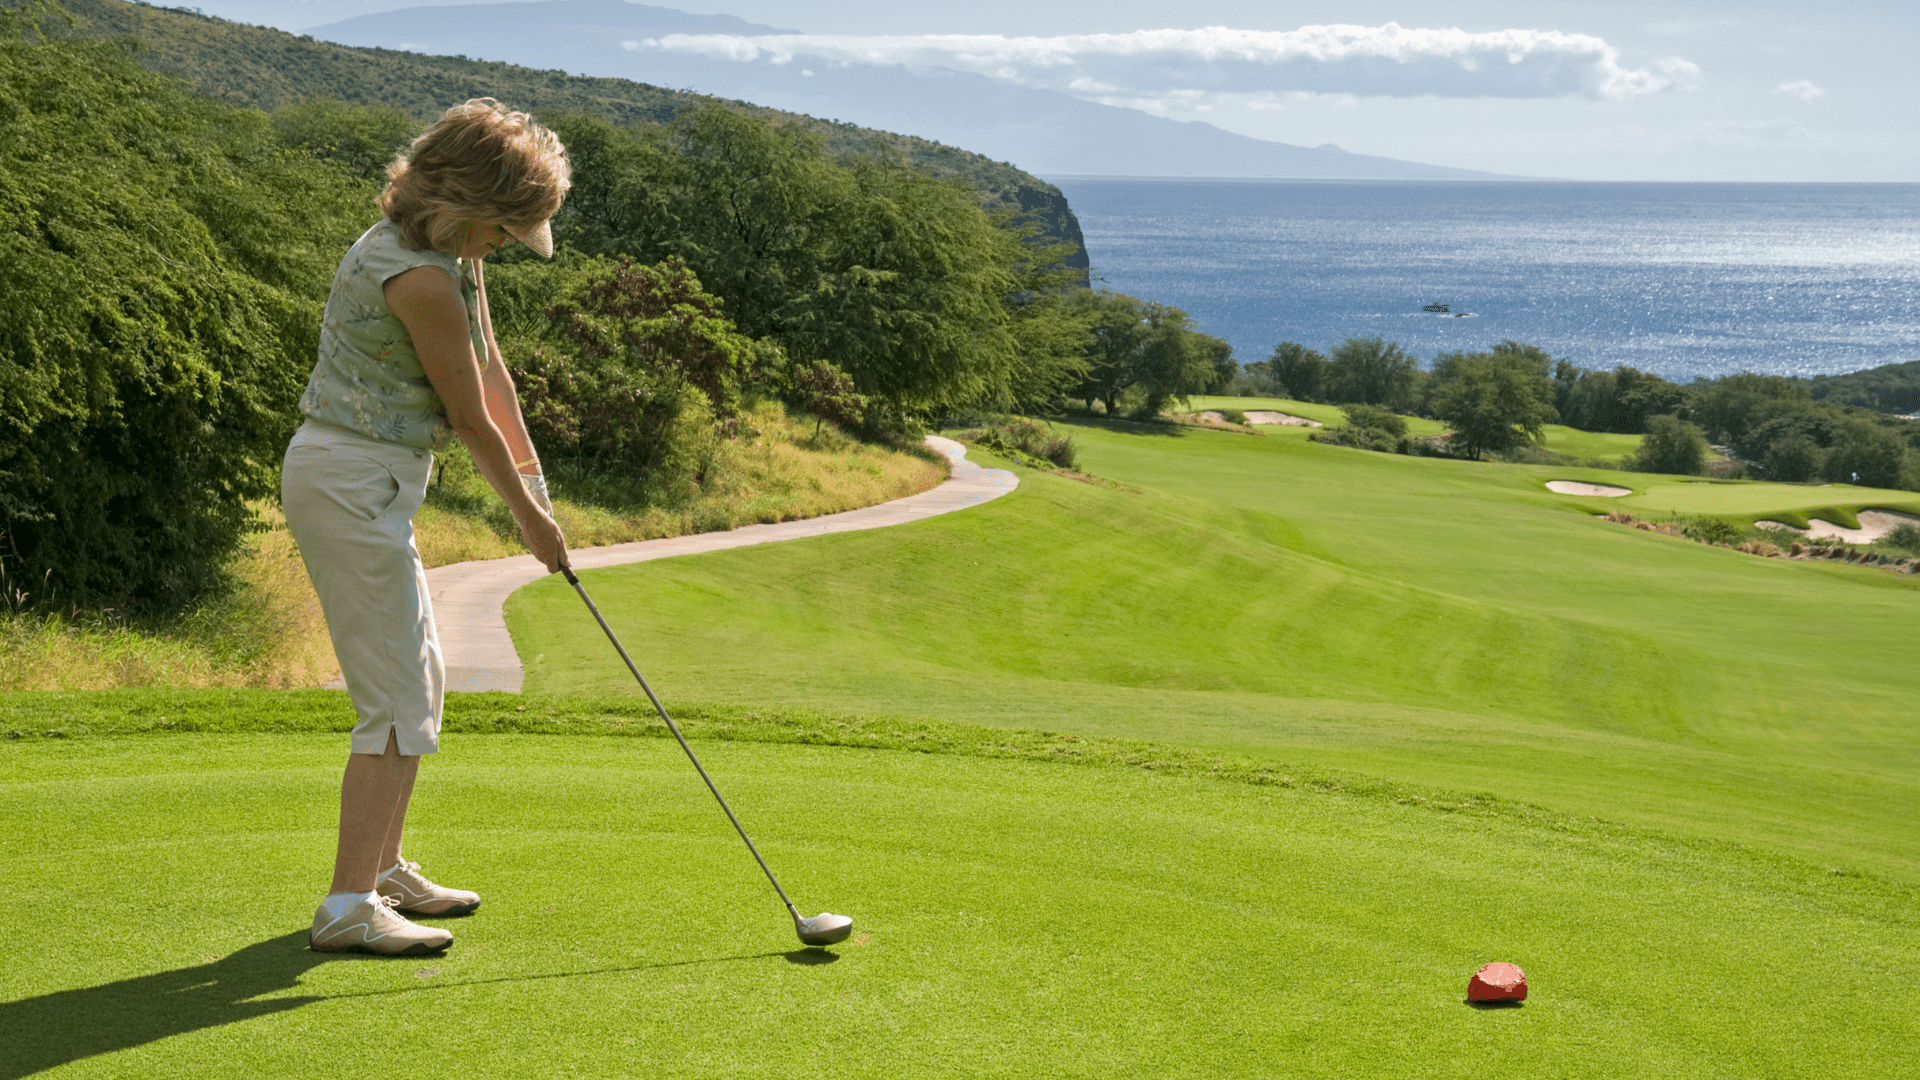 Best Golf Clubs for Senior Women - Ladies / Woman golfer teeing off